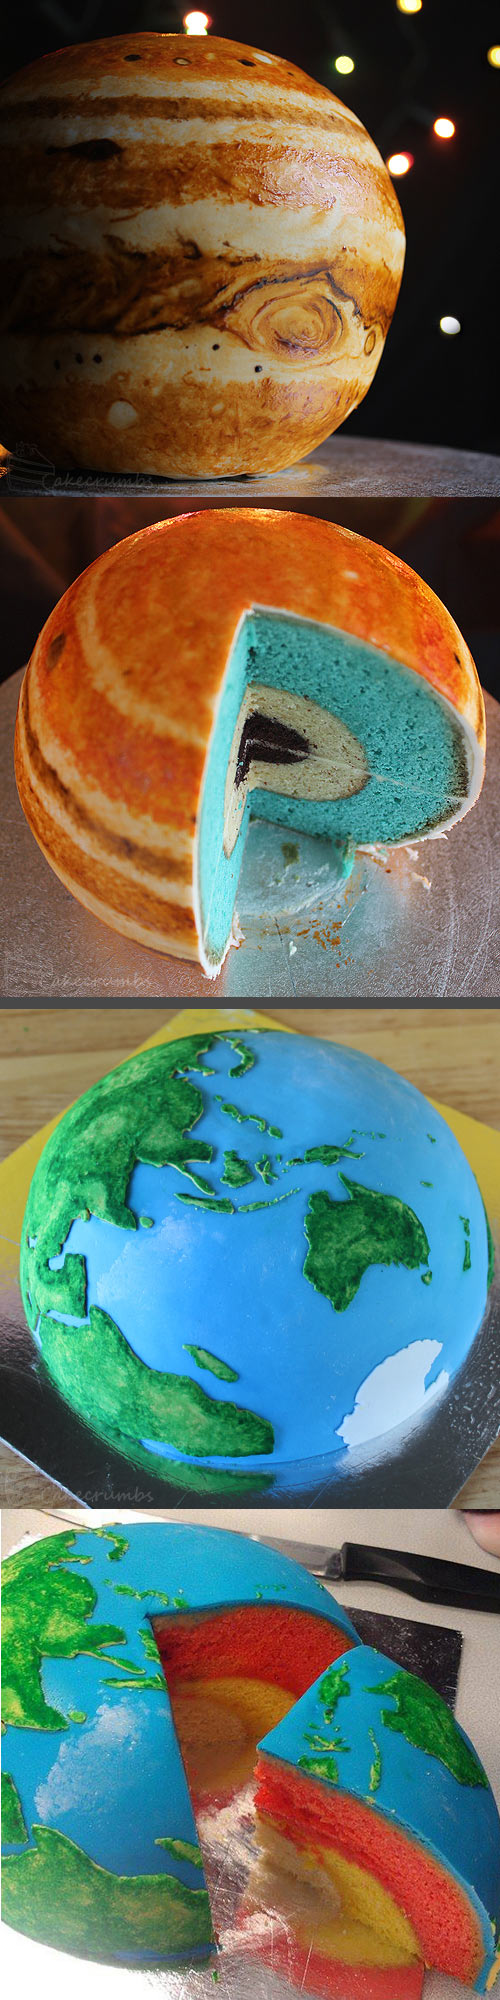 Planet cakes…